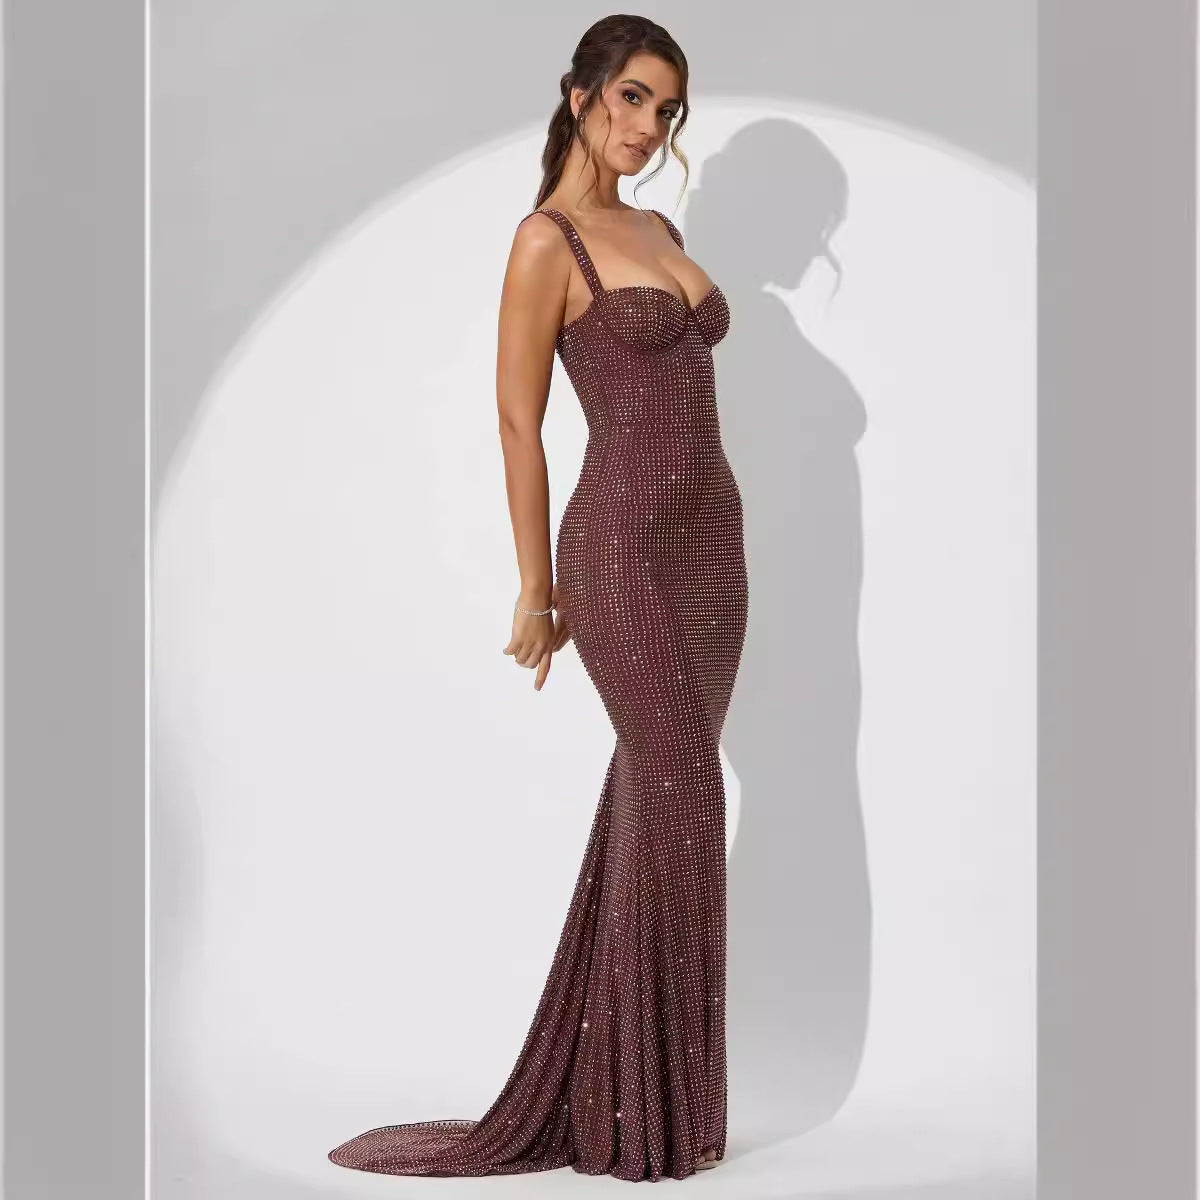 Chic Rhinestone Sleeveless Dress: Sleek Slim Fit for Women - Perfect for a Stylish Statement!